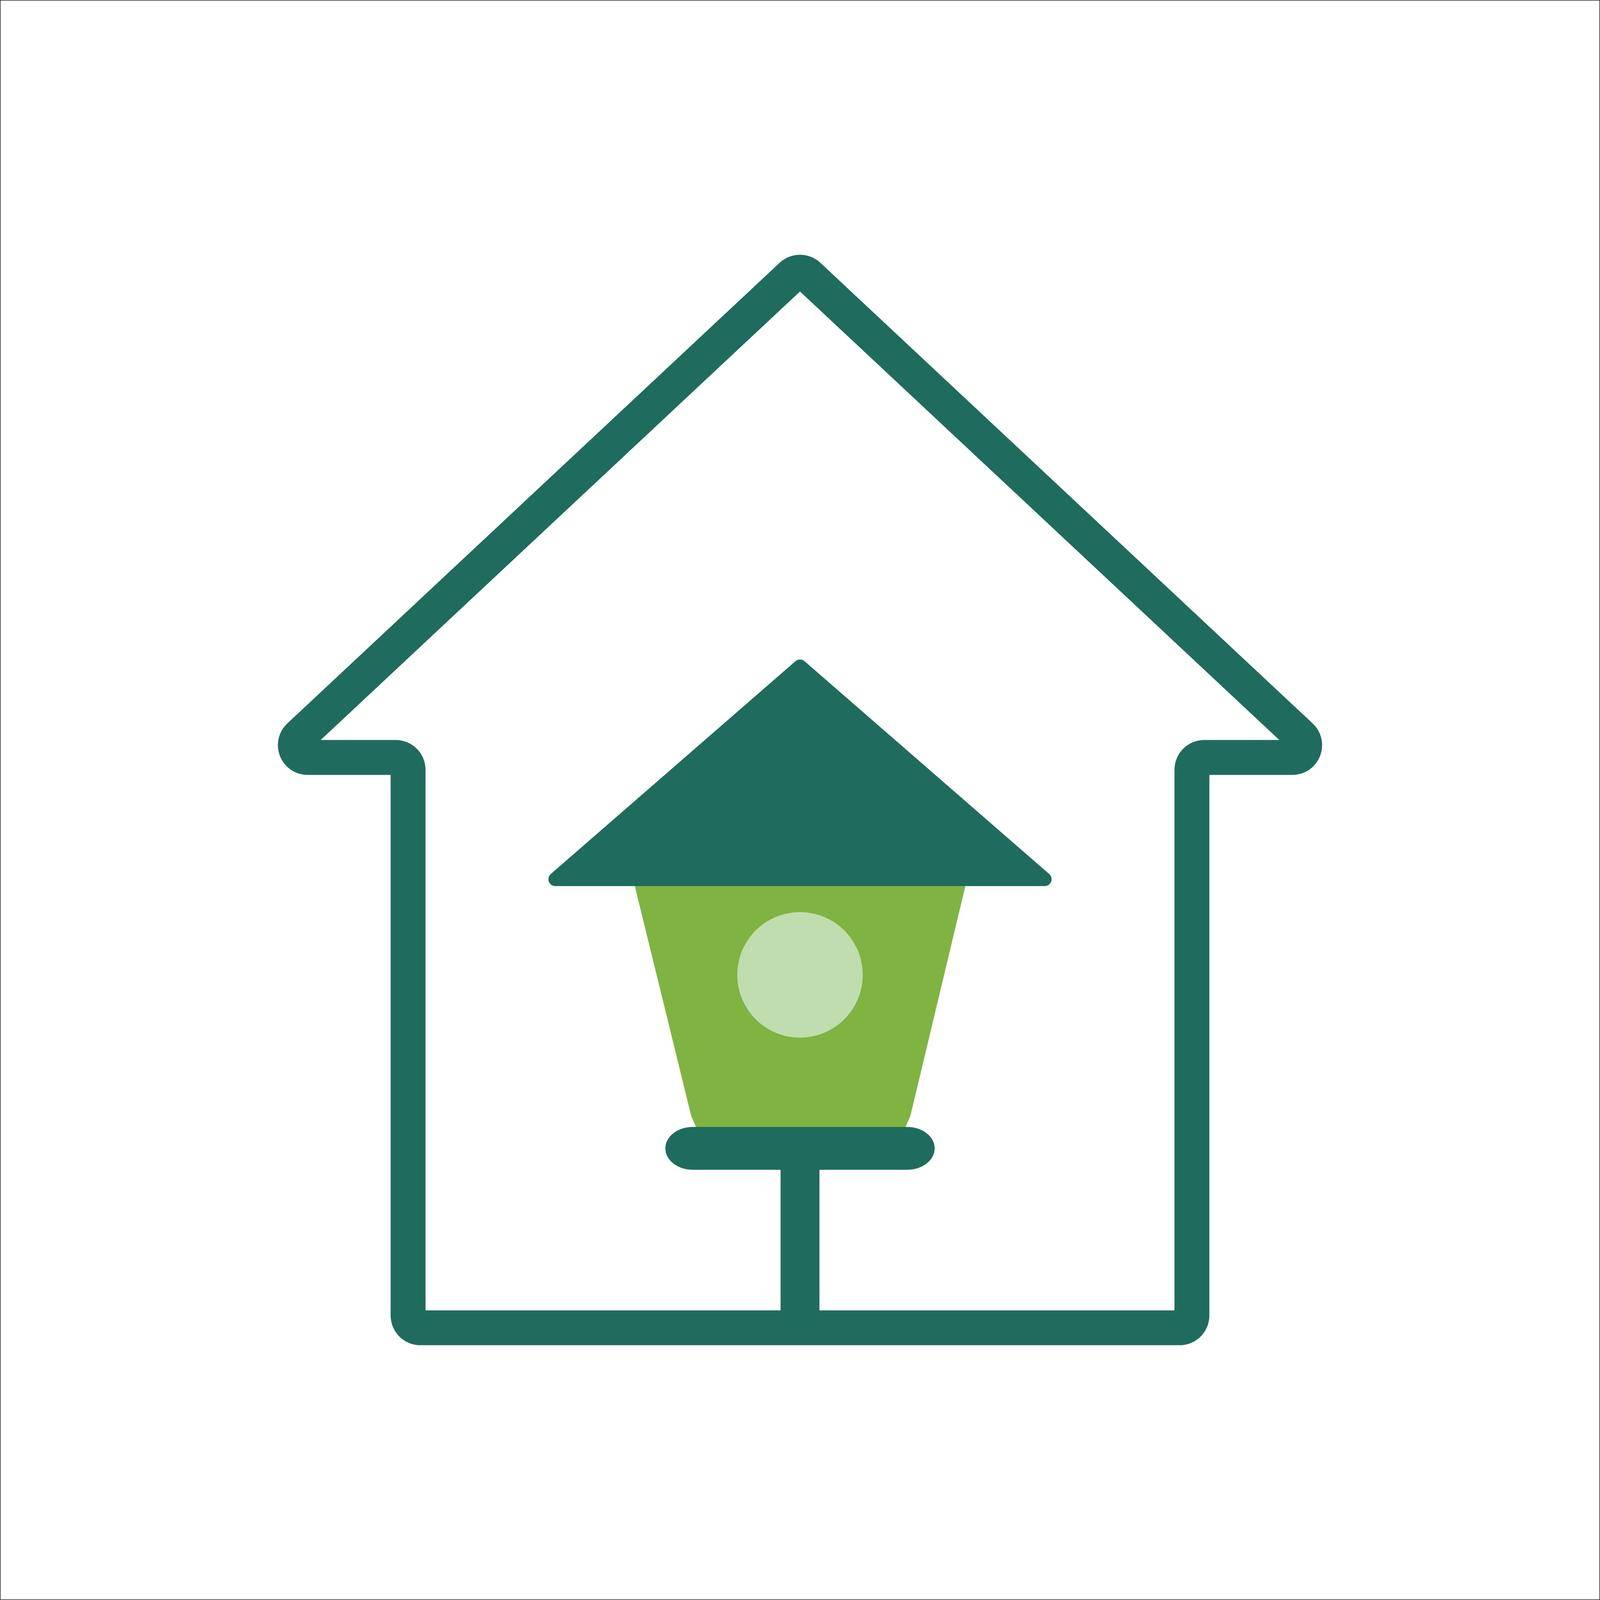 home icon concept for mobile and web design, design element. home icon logo illustration.